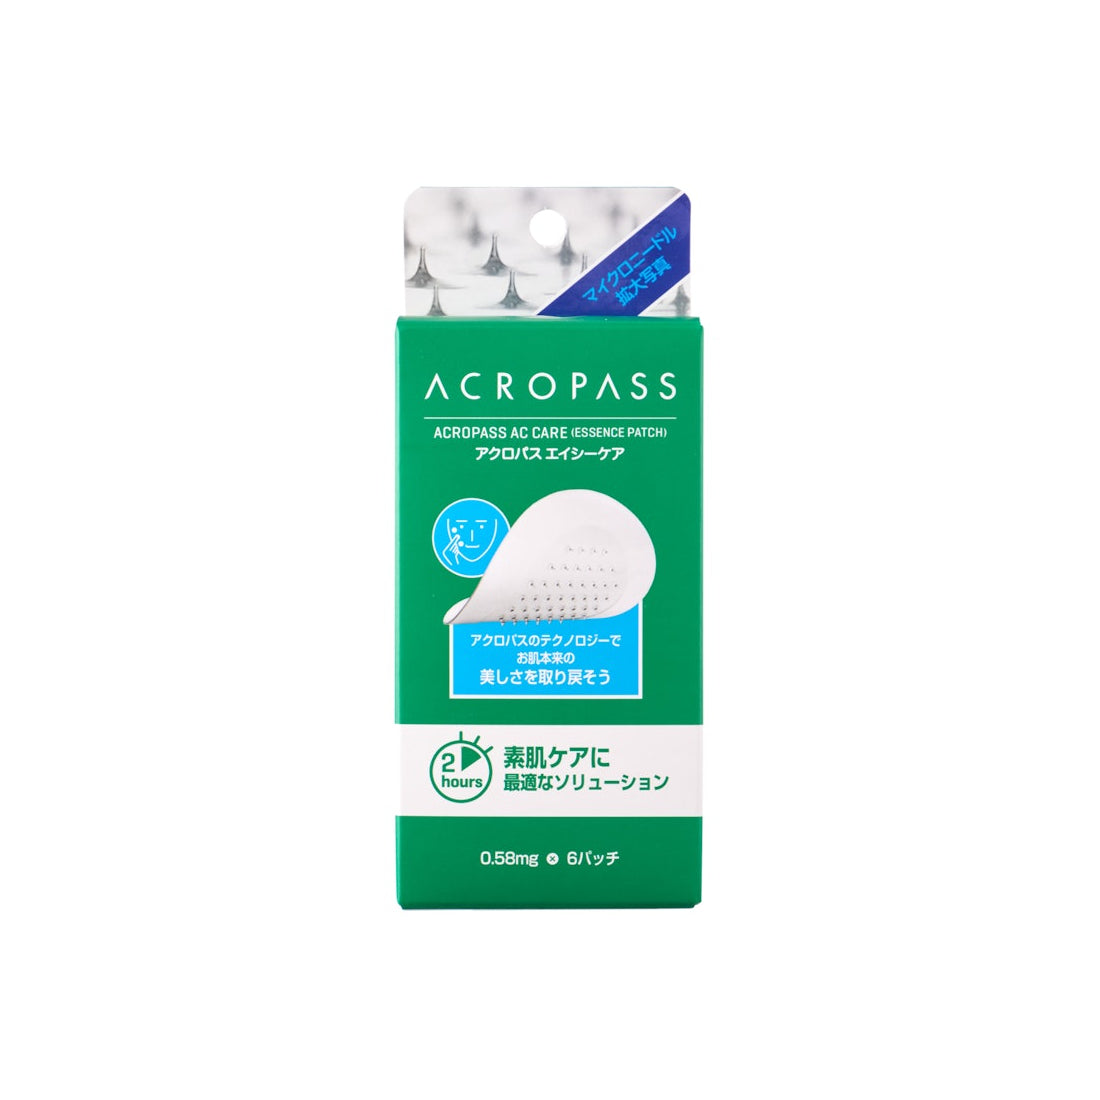 Acropass AC Care